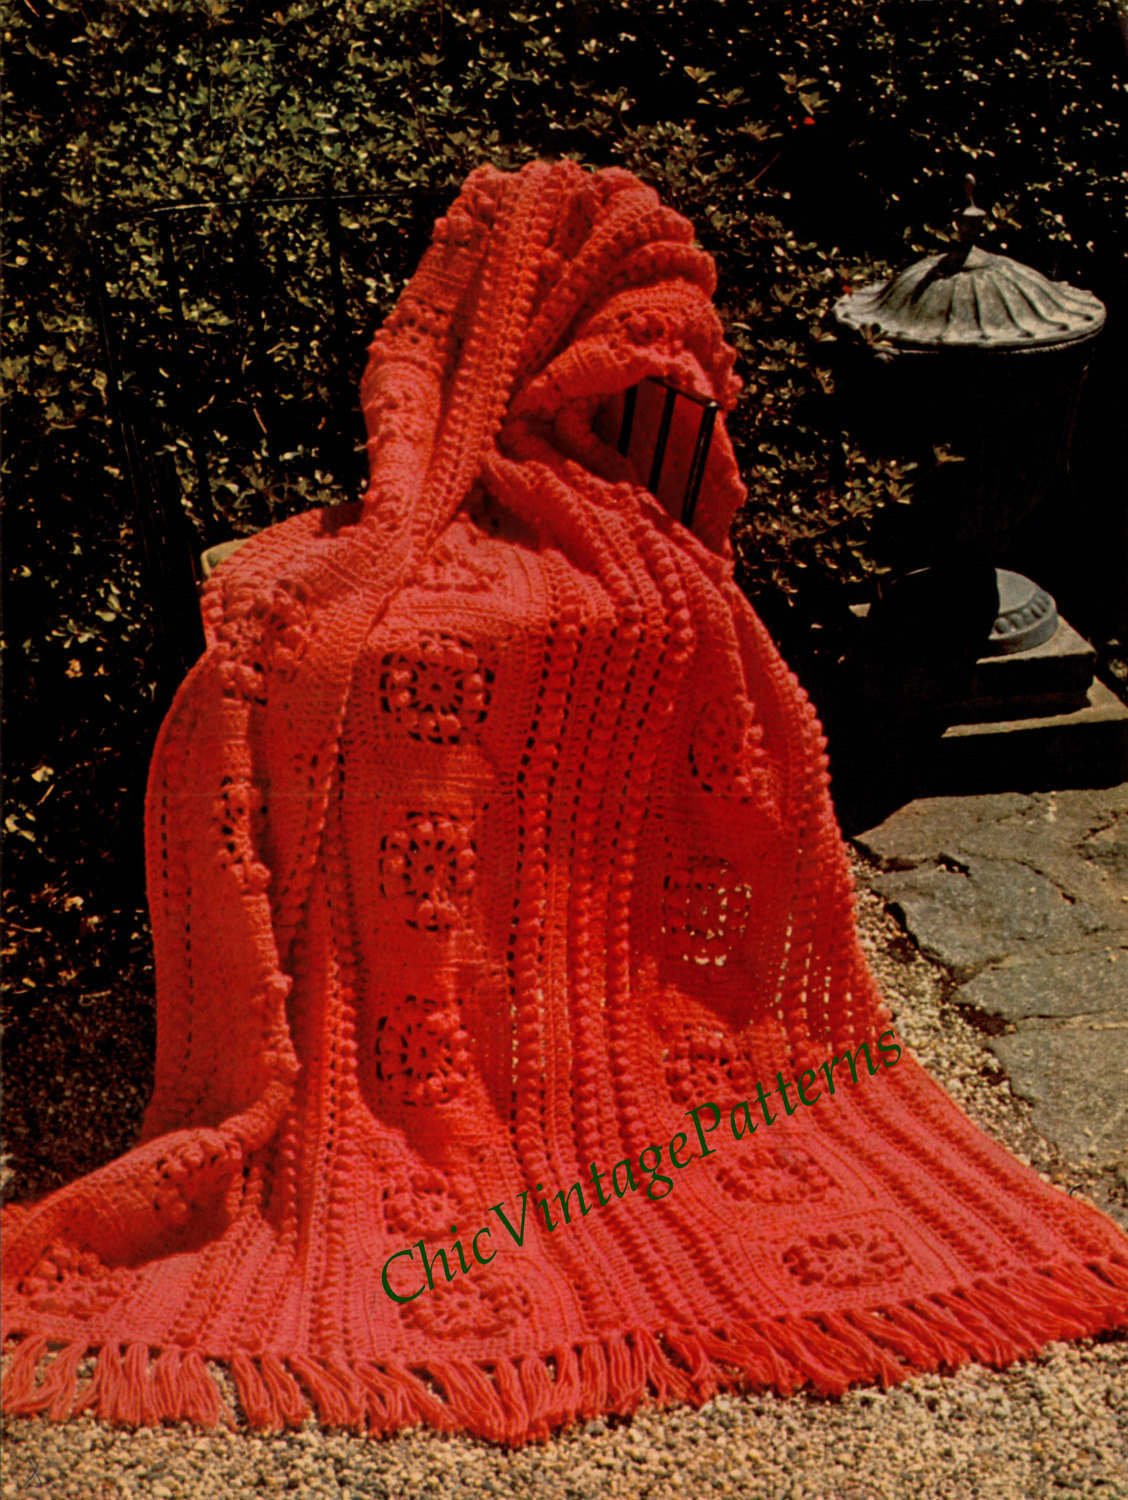 Crochet Bobble Afghan Rug Pattern, Crochet Squares, Instant Download